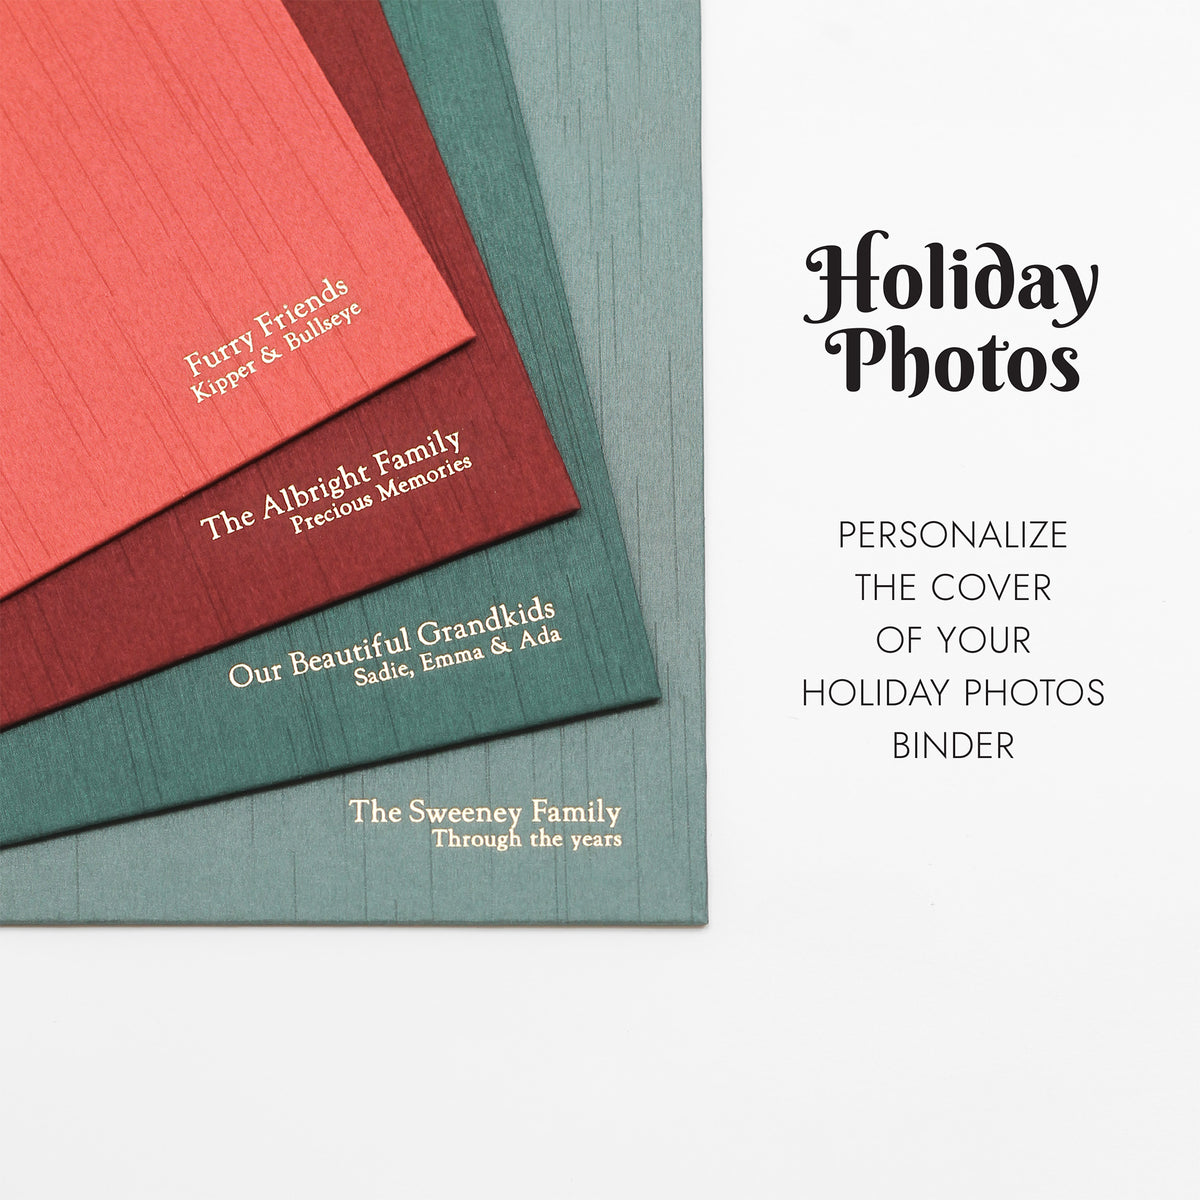 Medium Holiday Photo Binder with Jade Silk Cover for 4x6 Photos